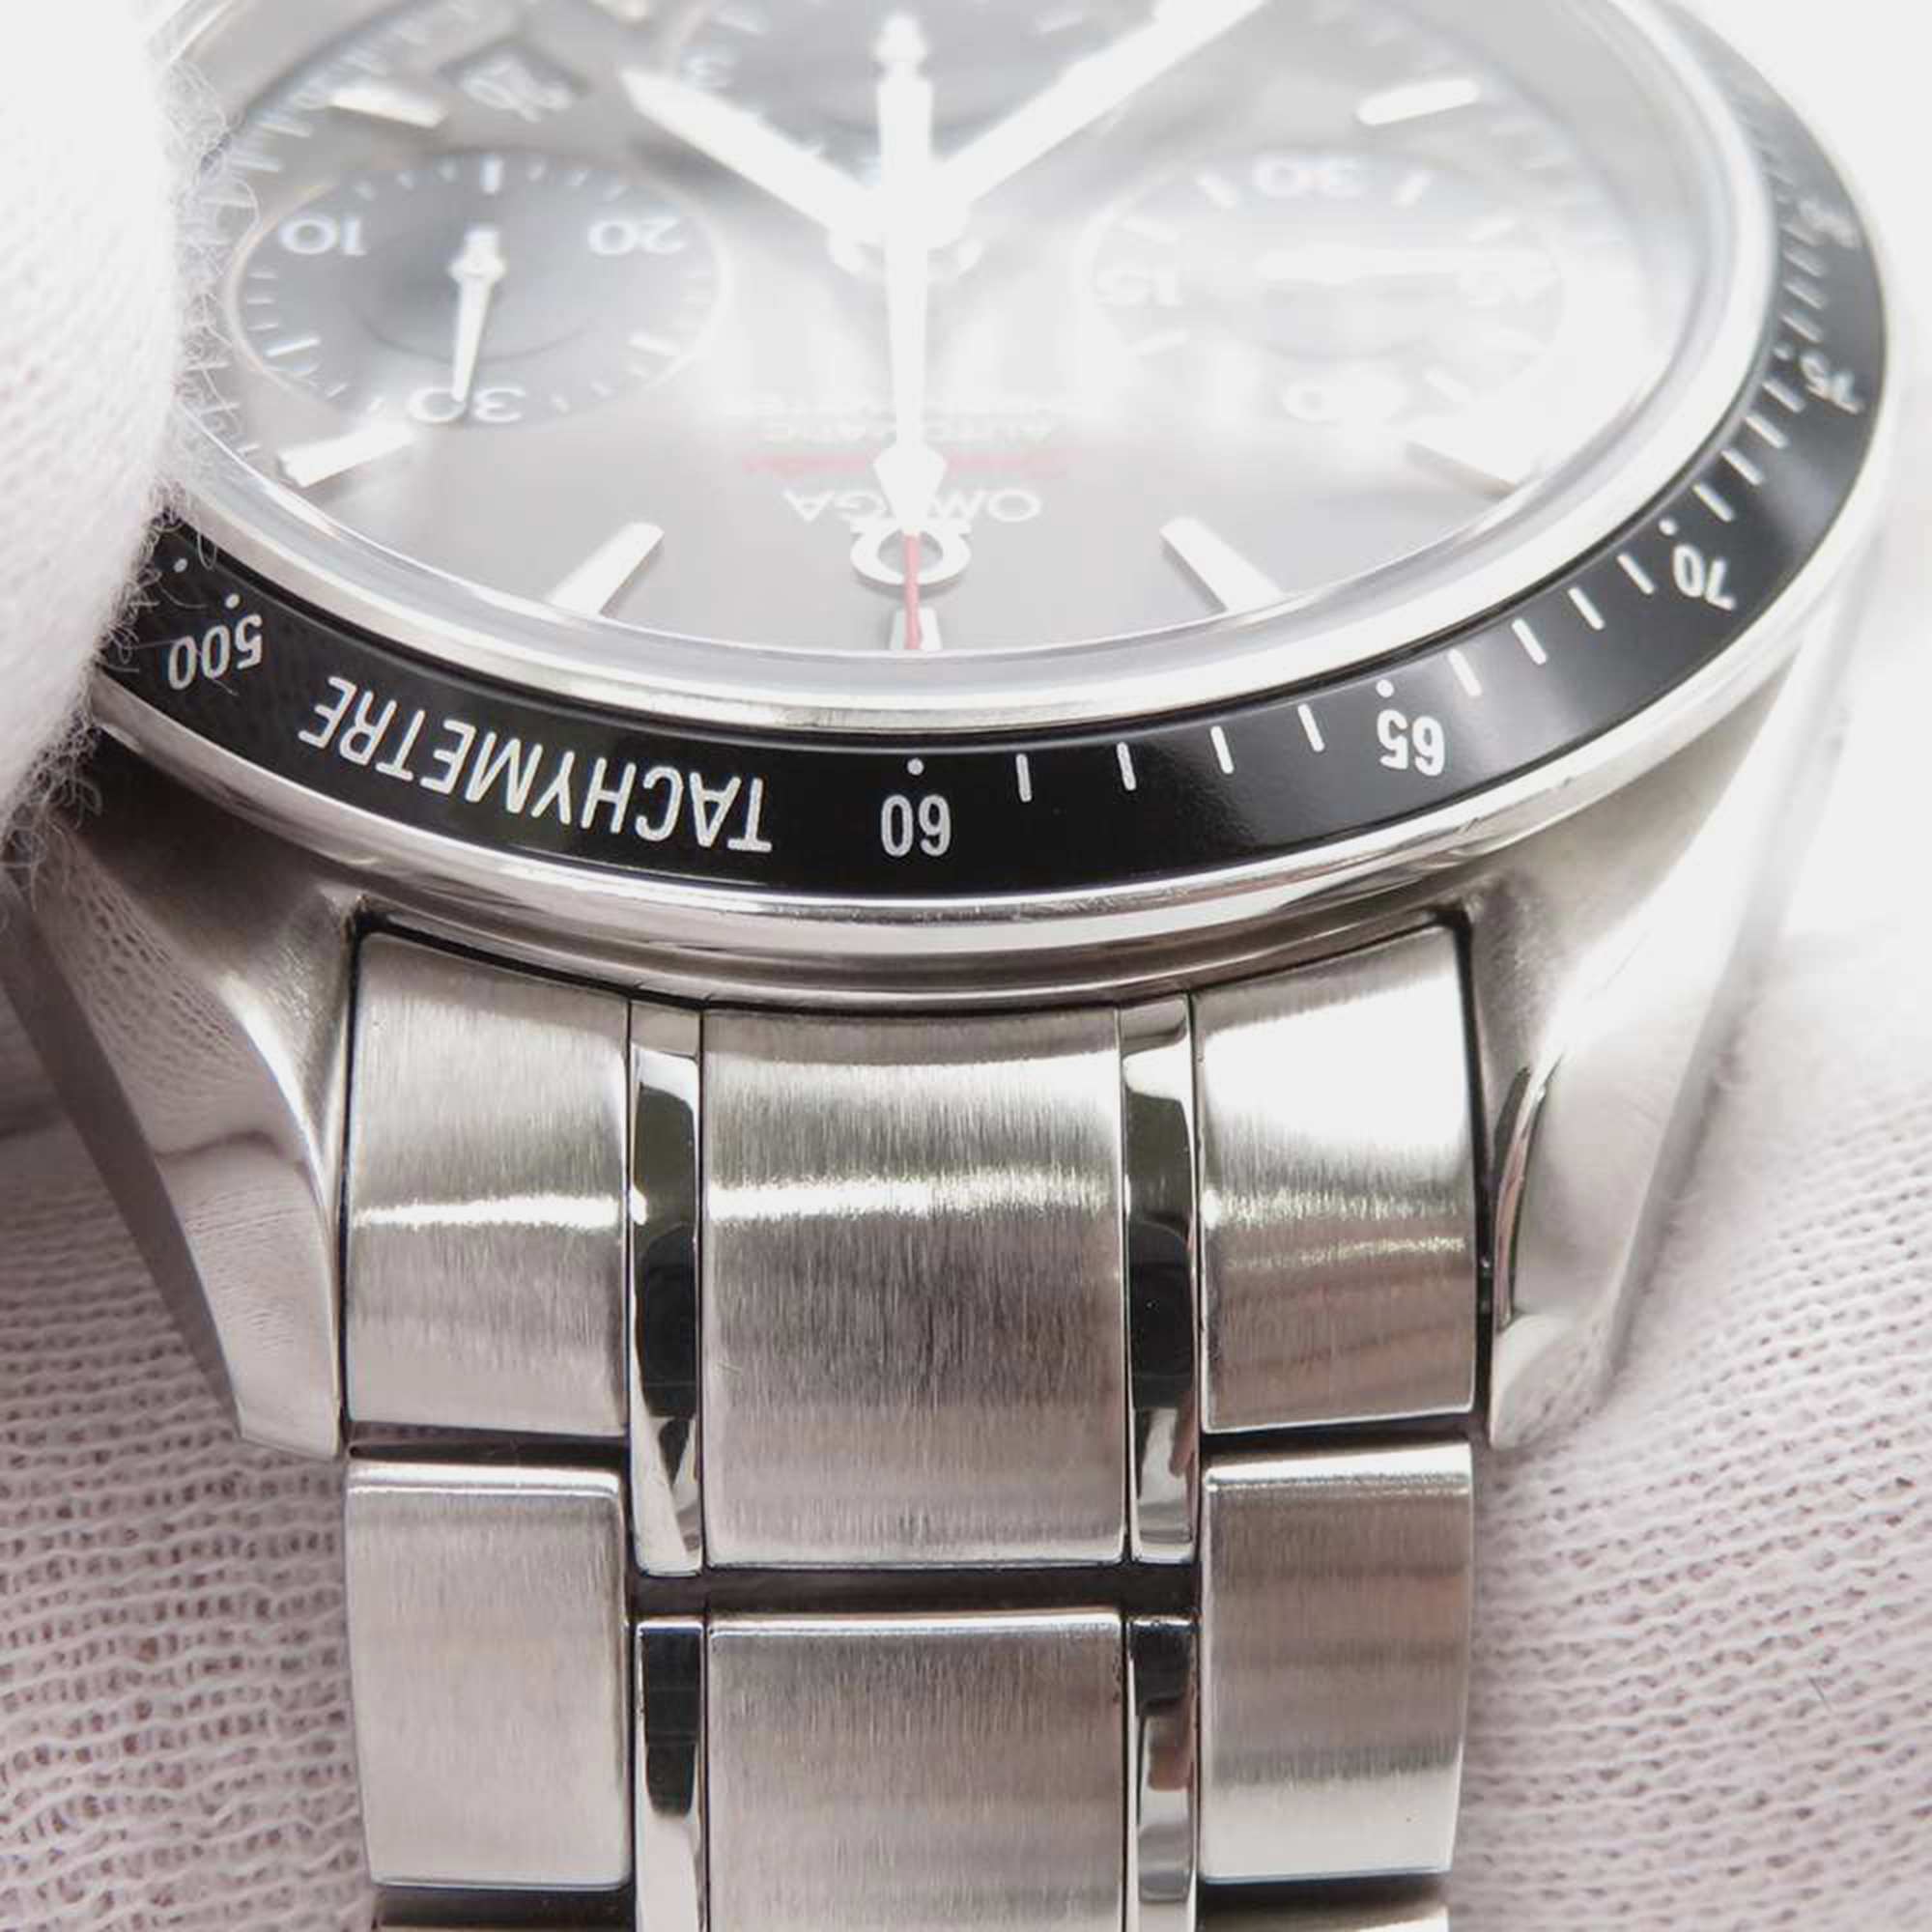 Omega Grey Stainless Steel Speedmaster 323.30.40.40.06.001 Automatic Men's Wristwatch 40 Mm